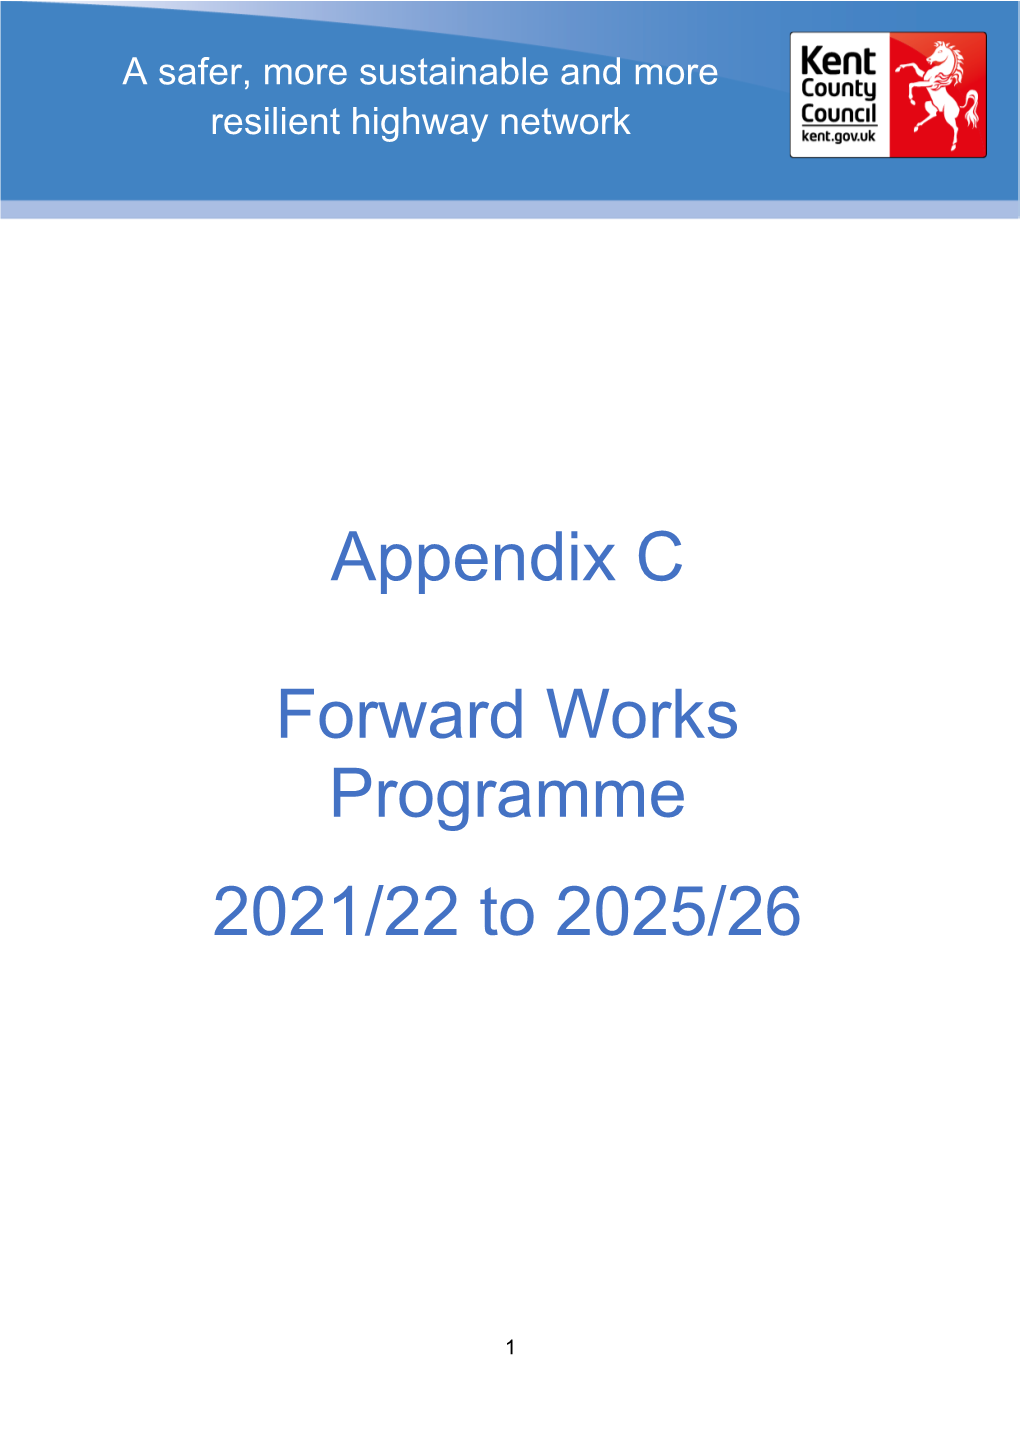 Forward Works Programme